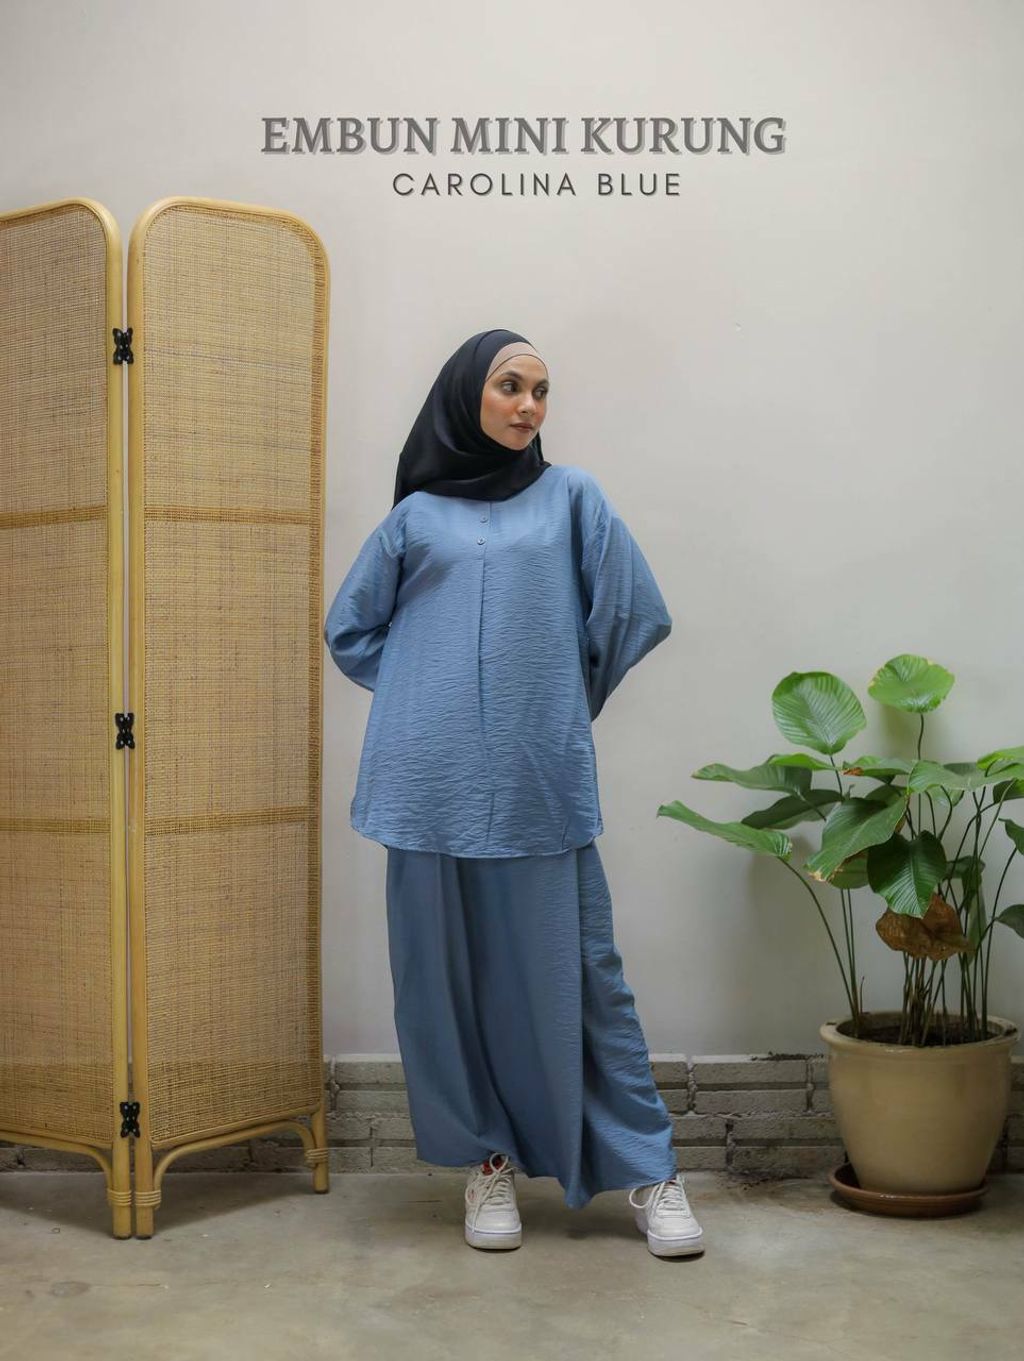 haura-wear-cotton-baju-muslimah-set-seluar-suit-muslimah-set-baju-dan-seluar-muslimah-palazzo (2).jpeg